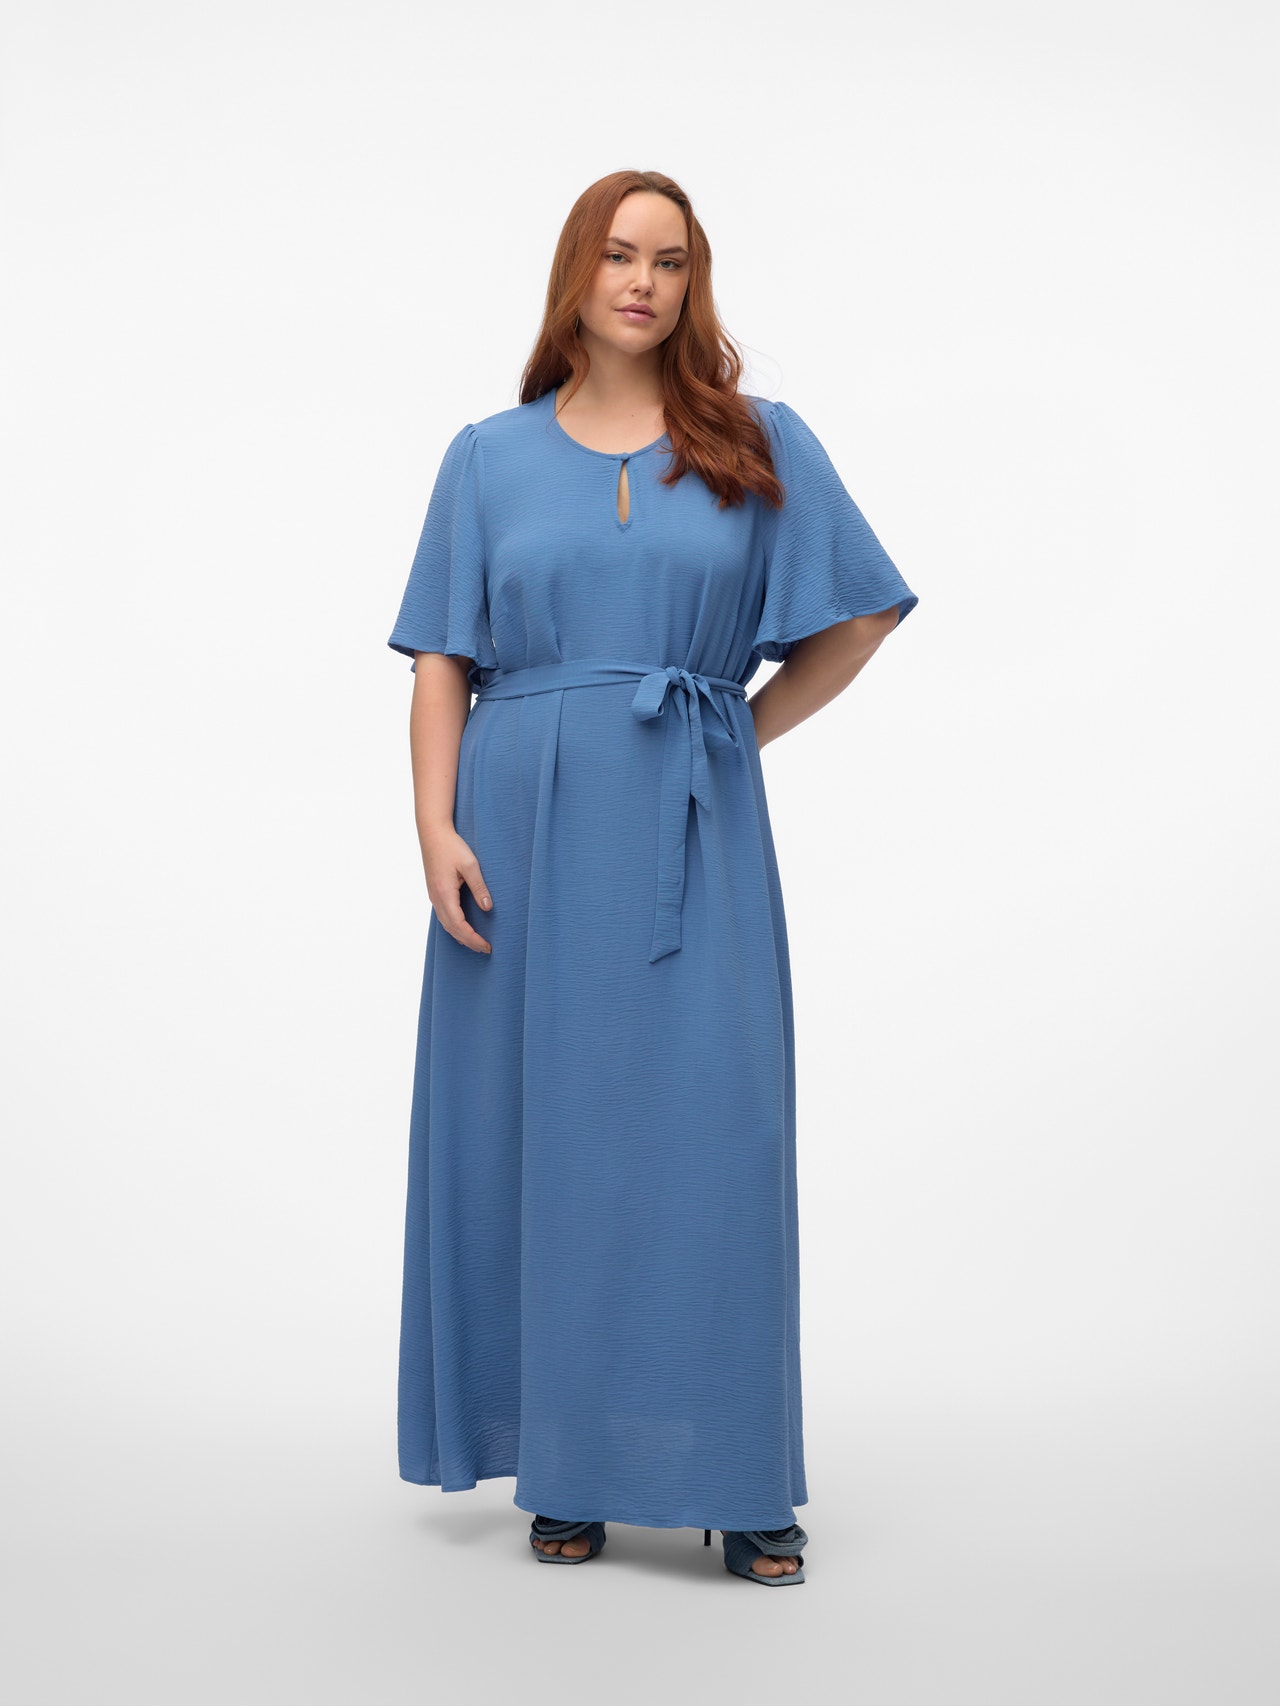 Vero Moda VMALVA Long dress -Coronet Blue - 10314051